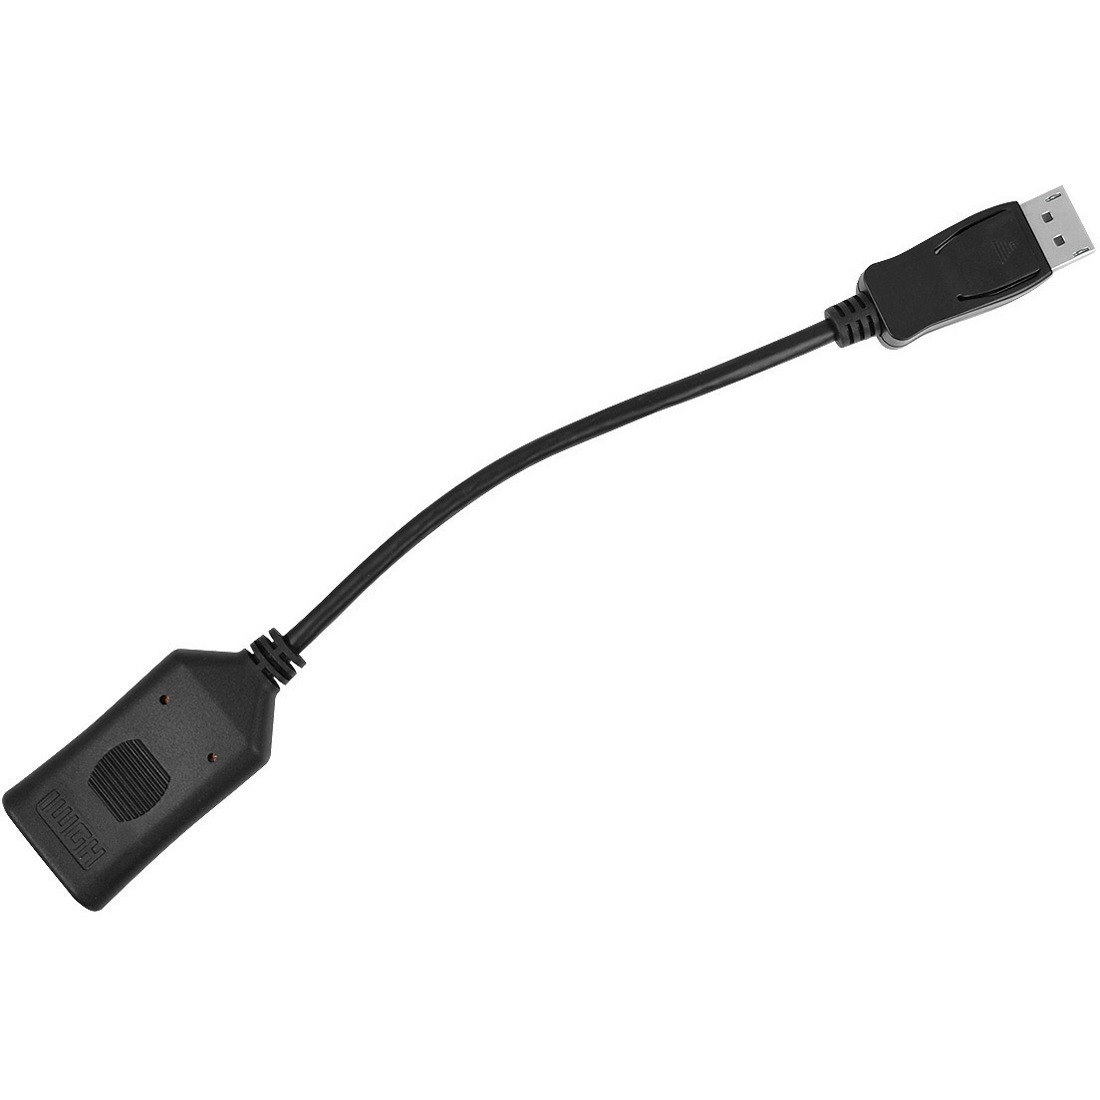 SIIG DisplayPort to HDMI Active Adapter